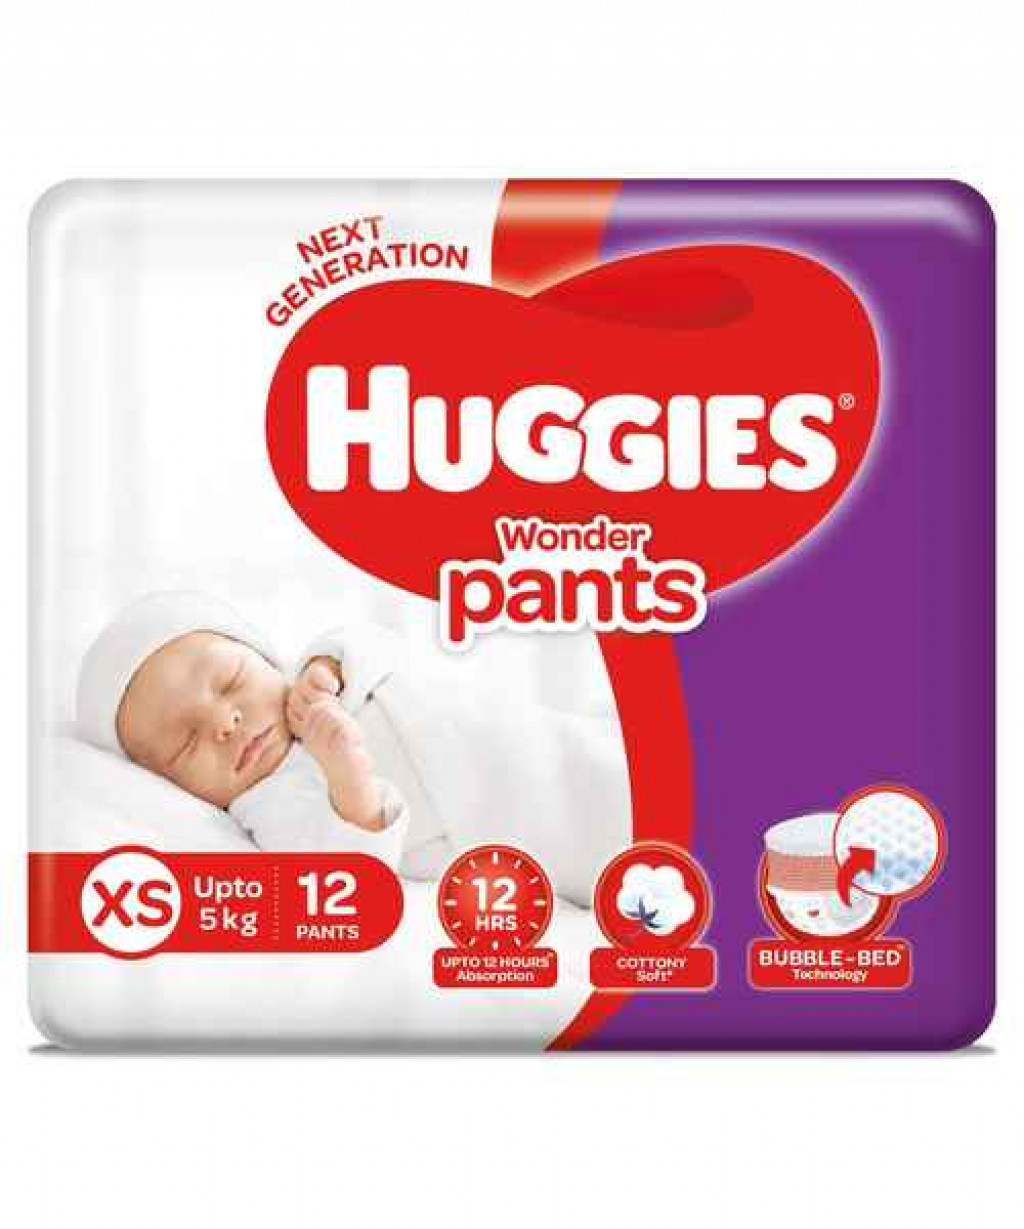 Huggies Wonder Pants Diaper (XS, Upto 5 Kg) + Huggies Nature Care Baby  Wipes Combo Price - Buy Online at Best Price in India